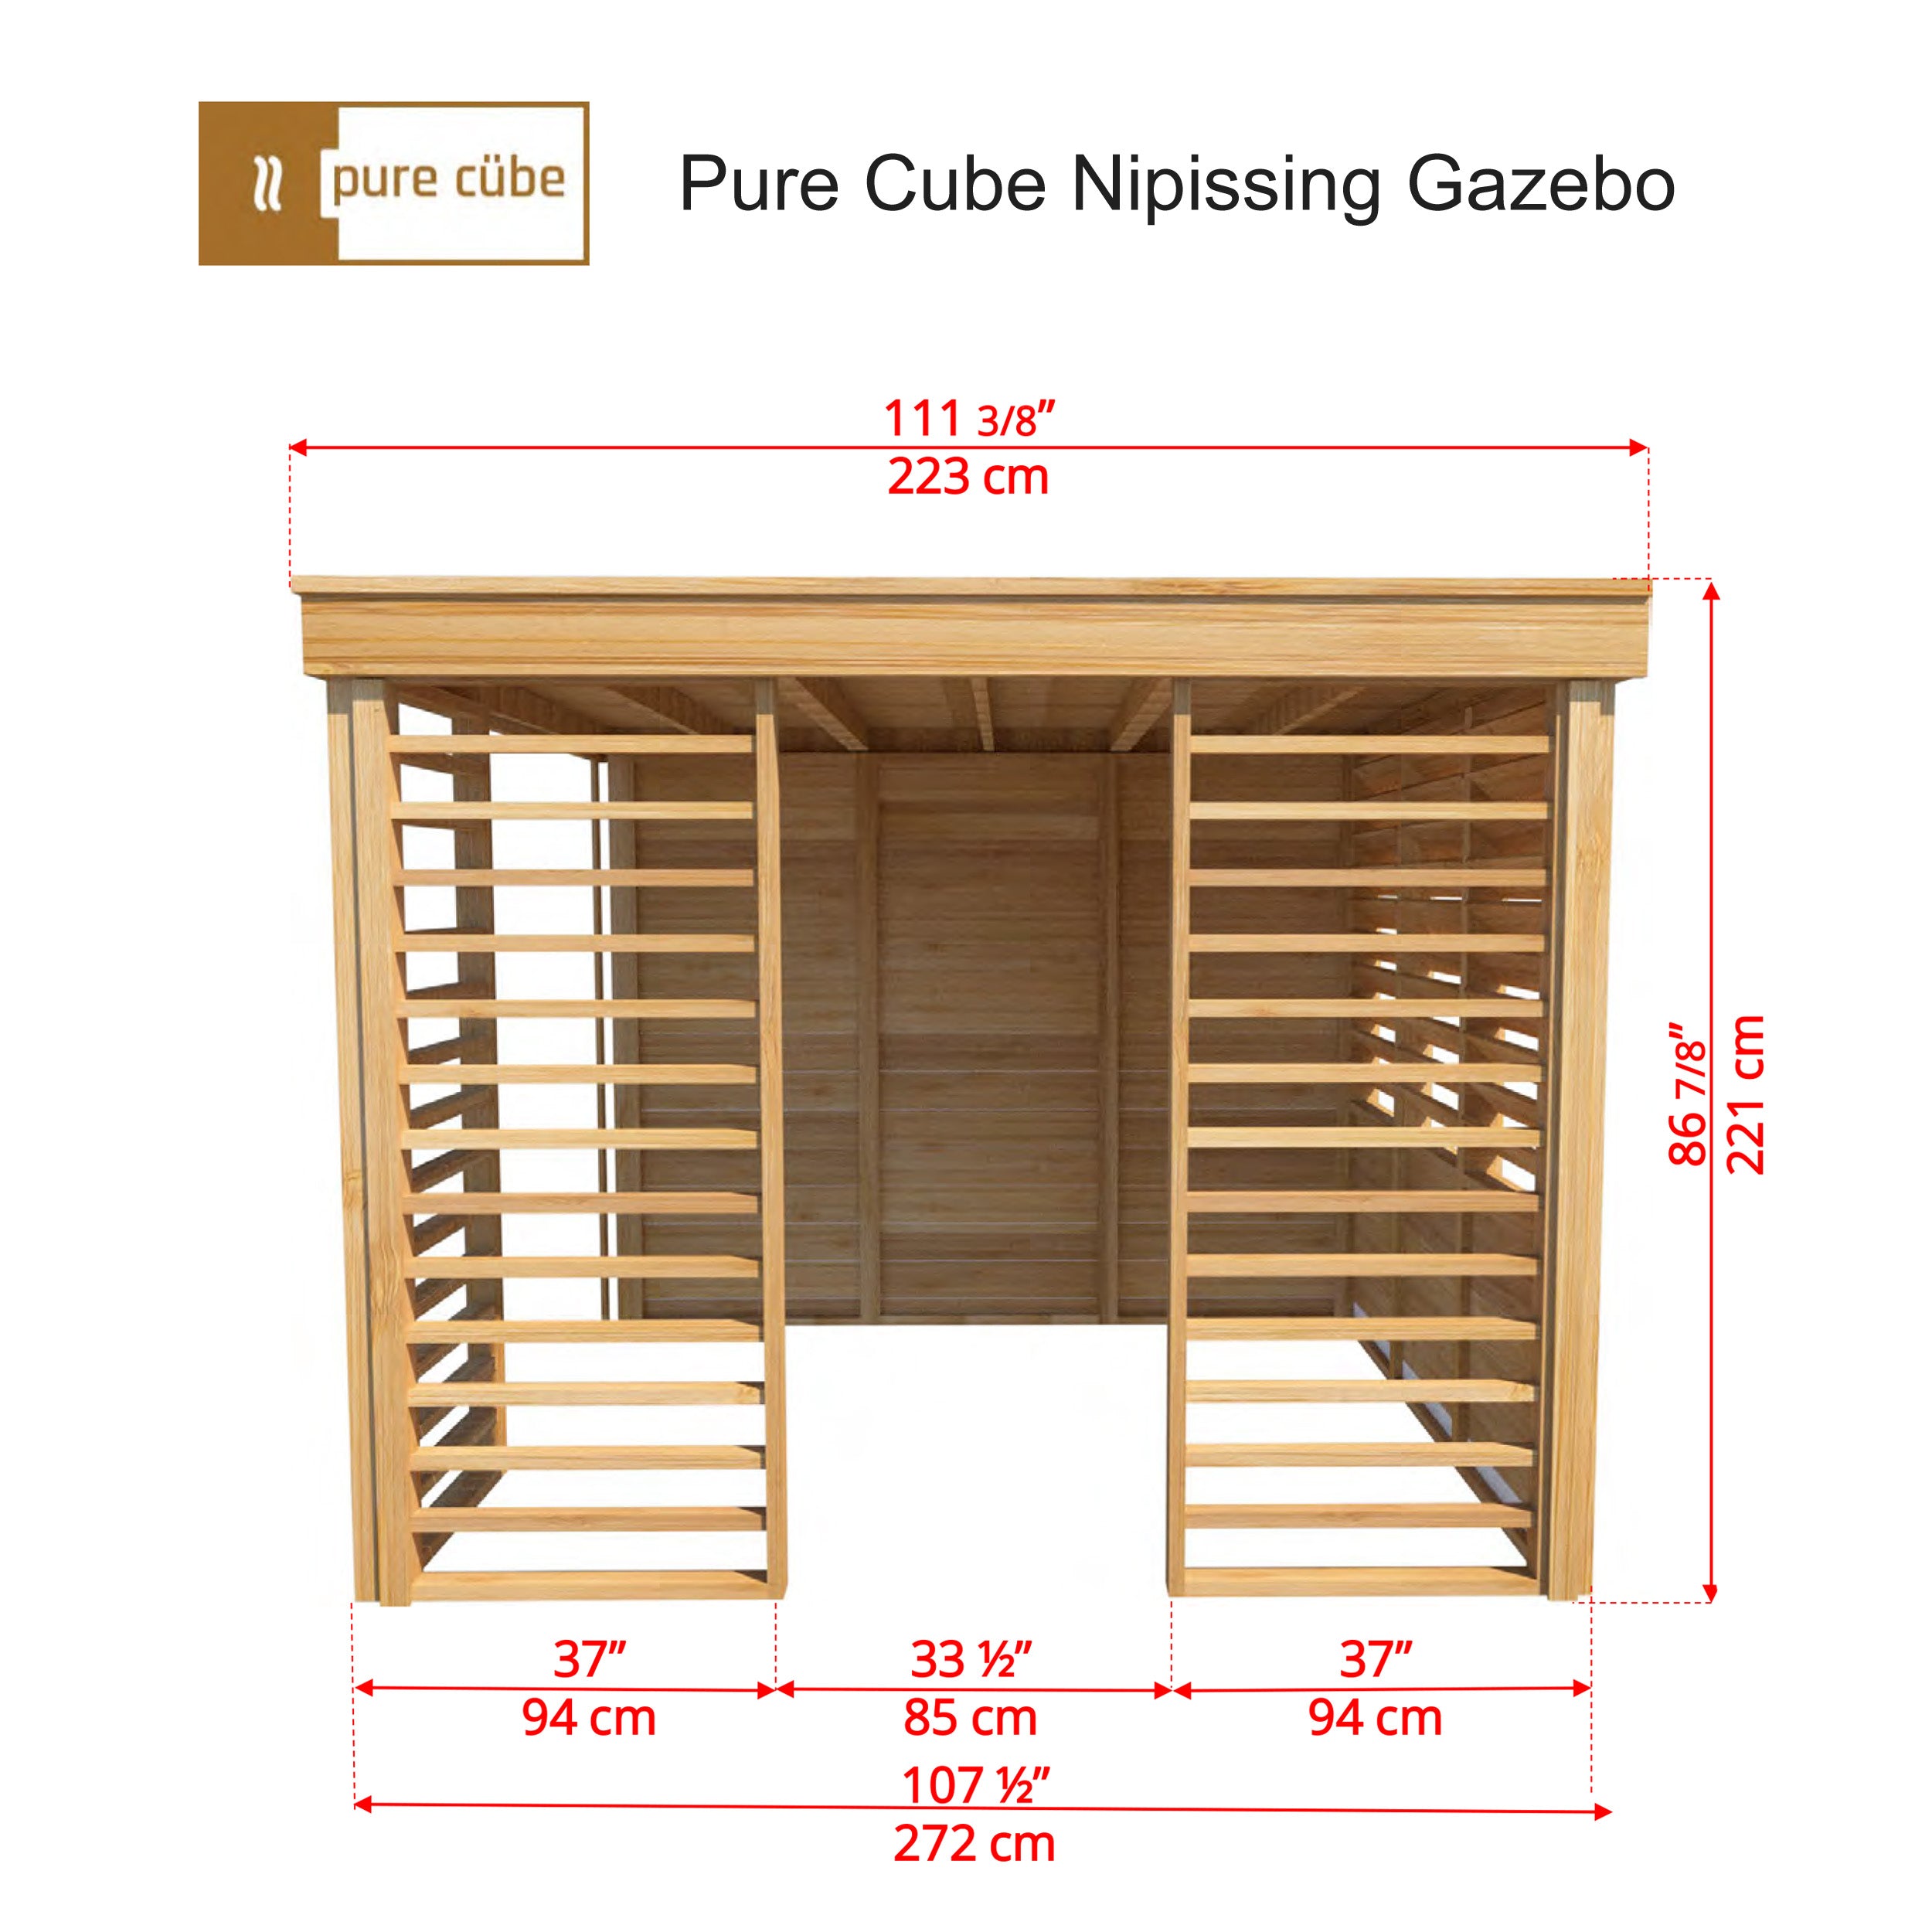 Pure Cube Nipissing Gazebo Dimensions